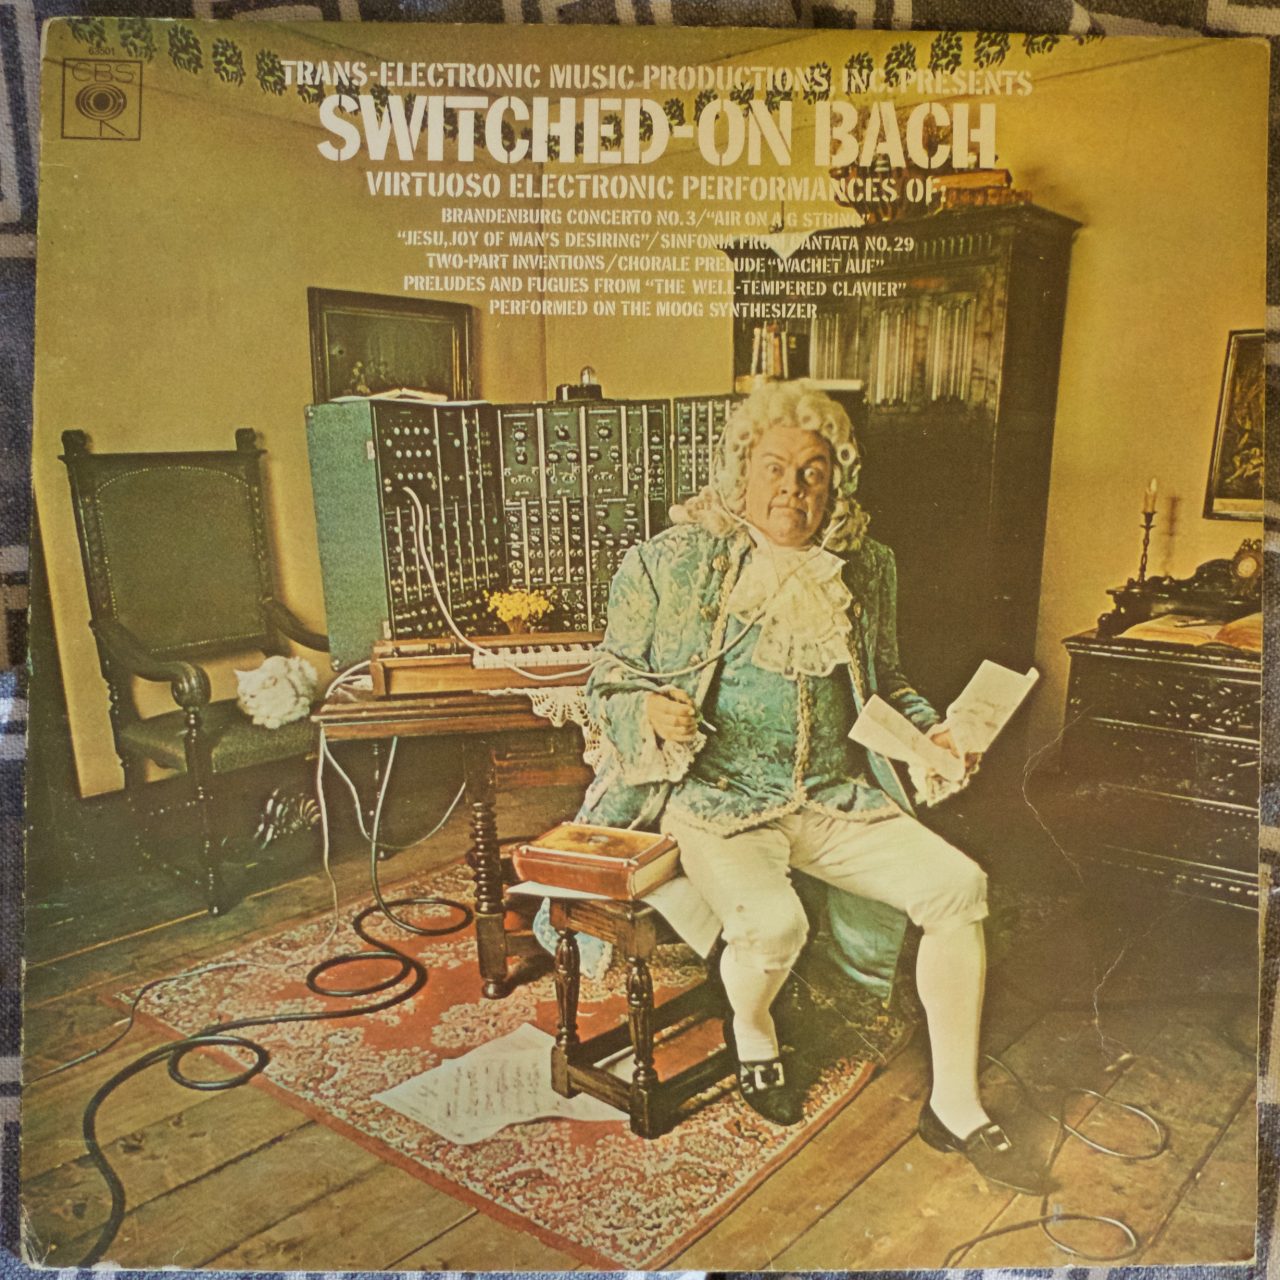 Pochette de l’album de Walter Carlos / Switched-on Bach